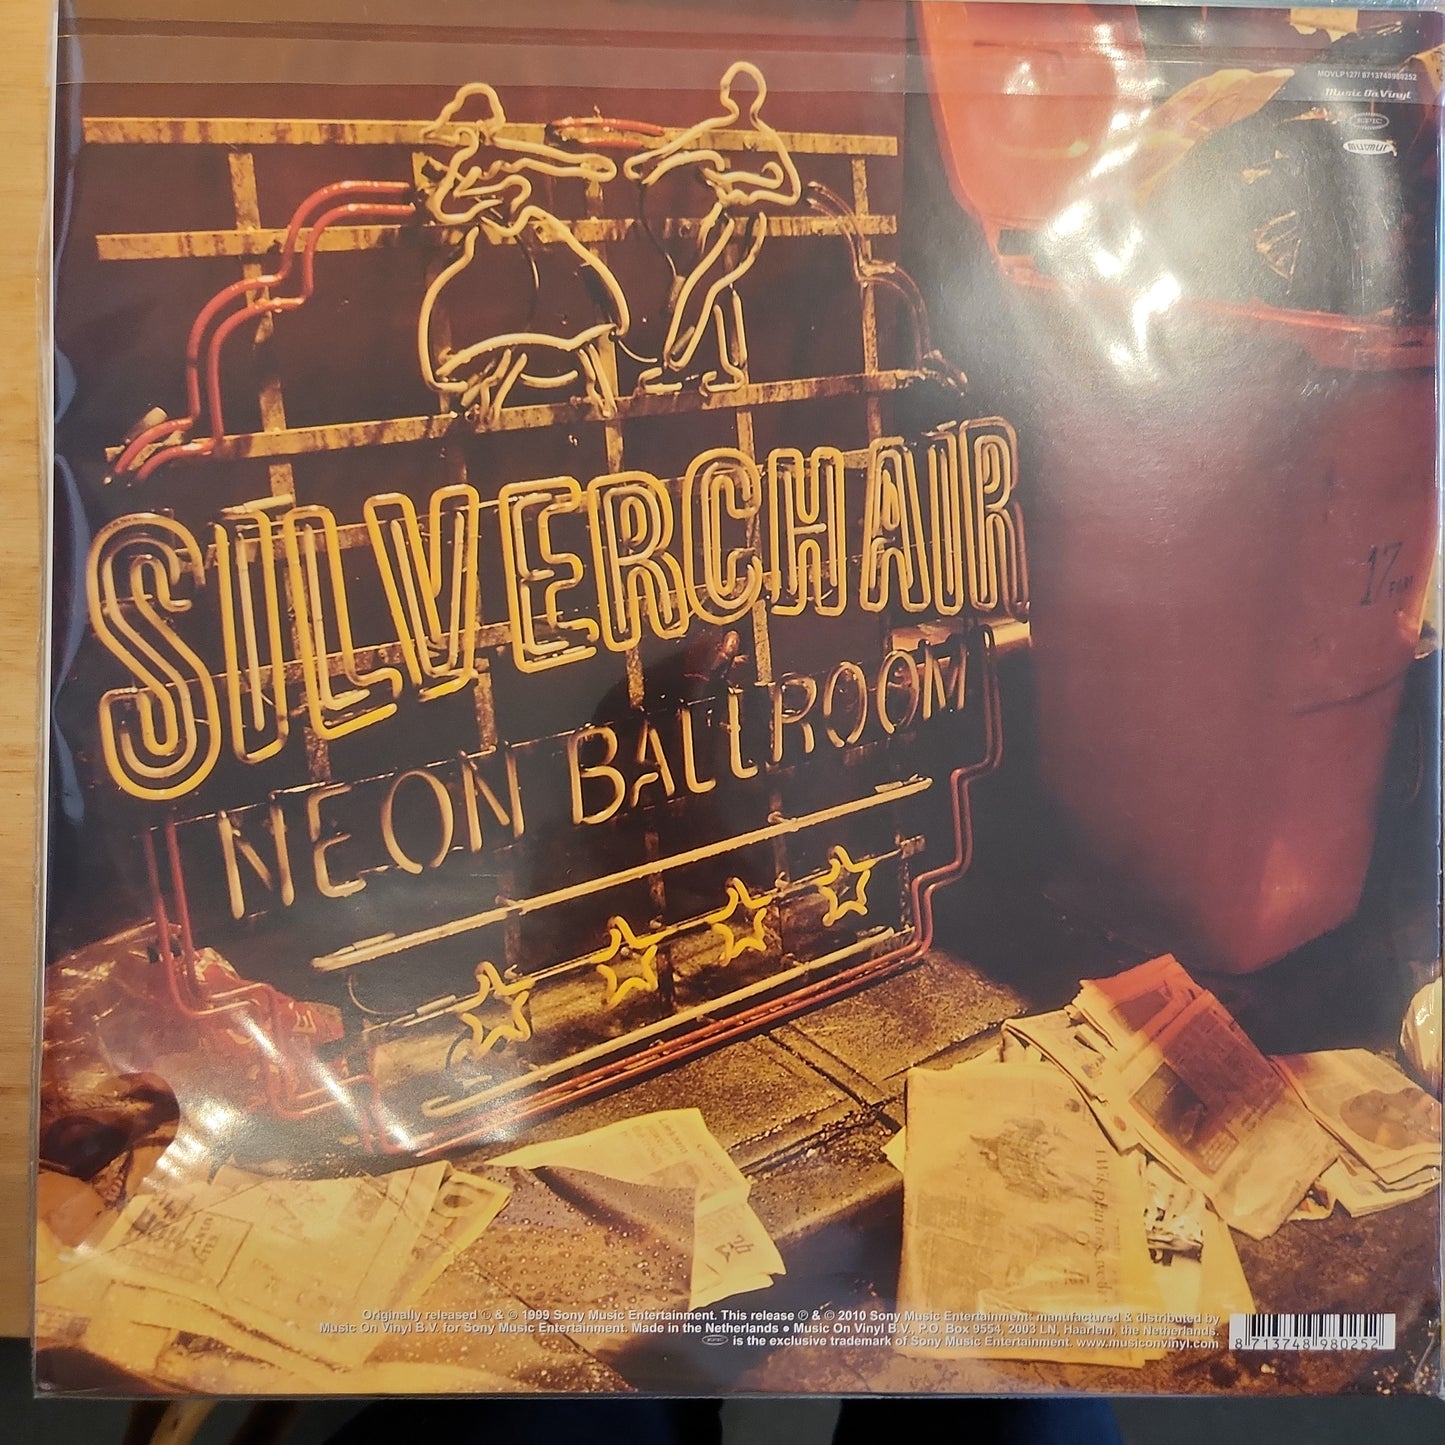 Silverchair - Neon Ballroom - Vinyl LP